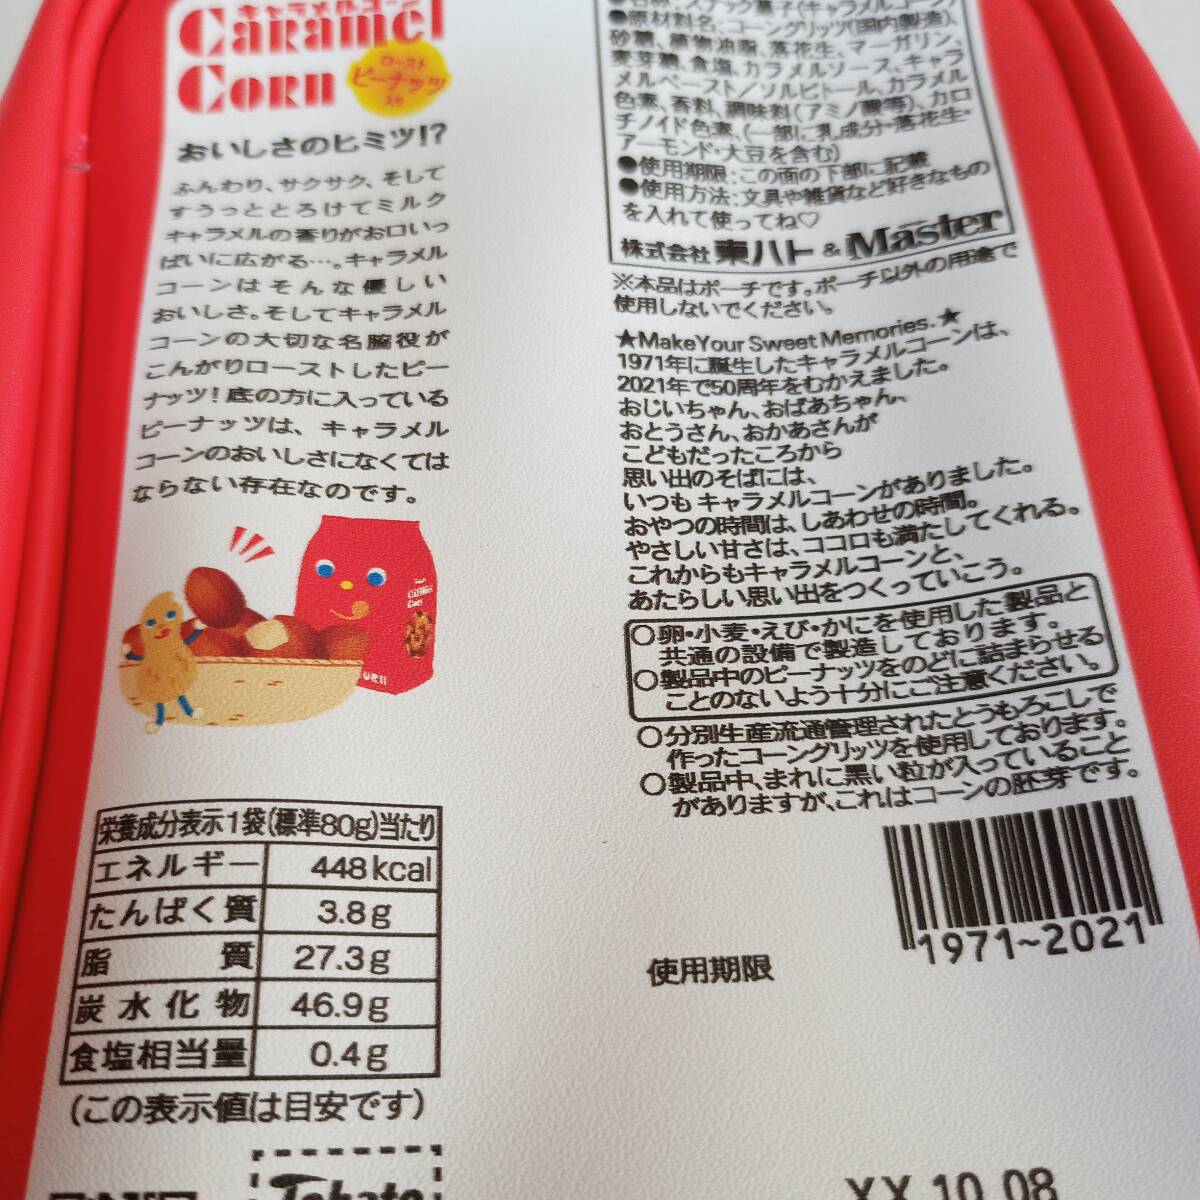 P93 unused caramel corn .... pouch red appendix 18.×11cm×6.